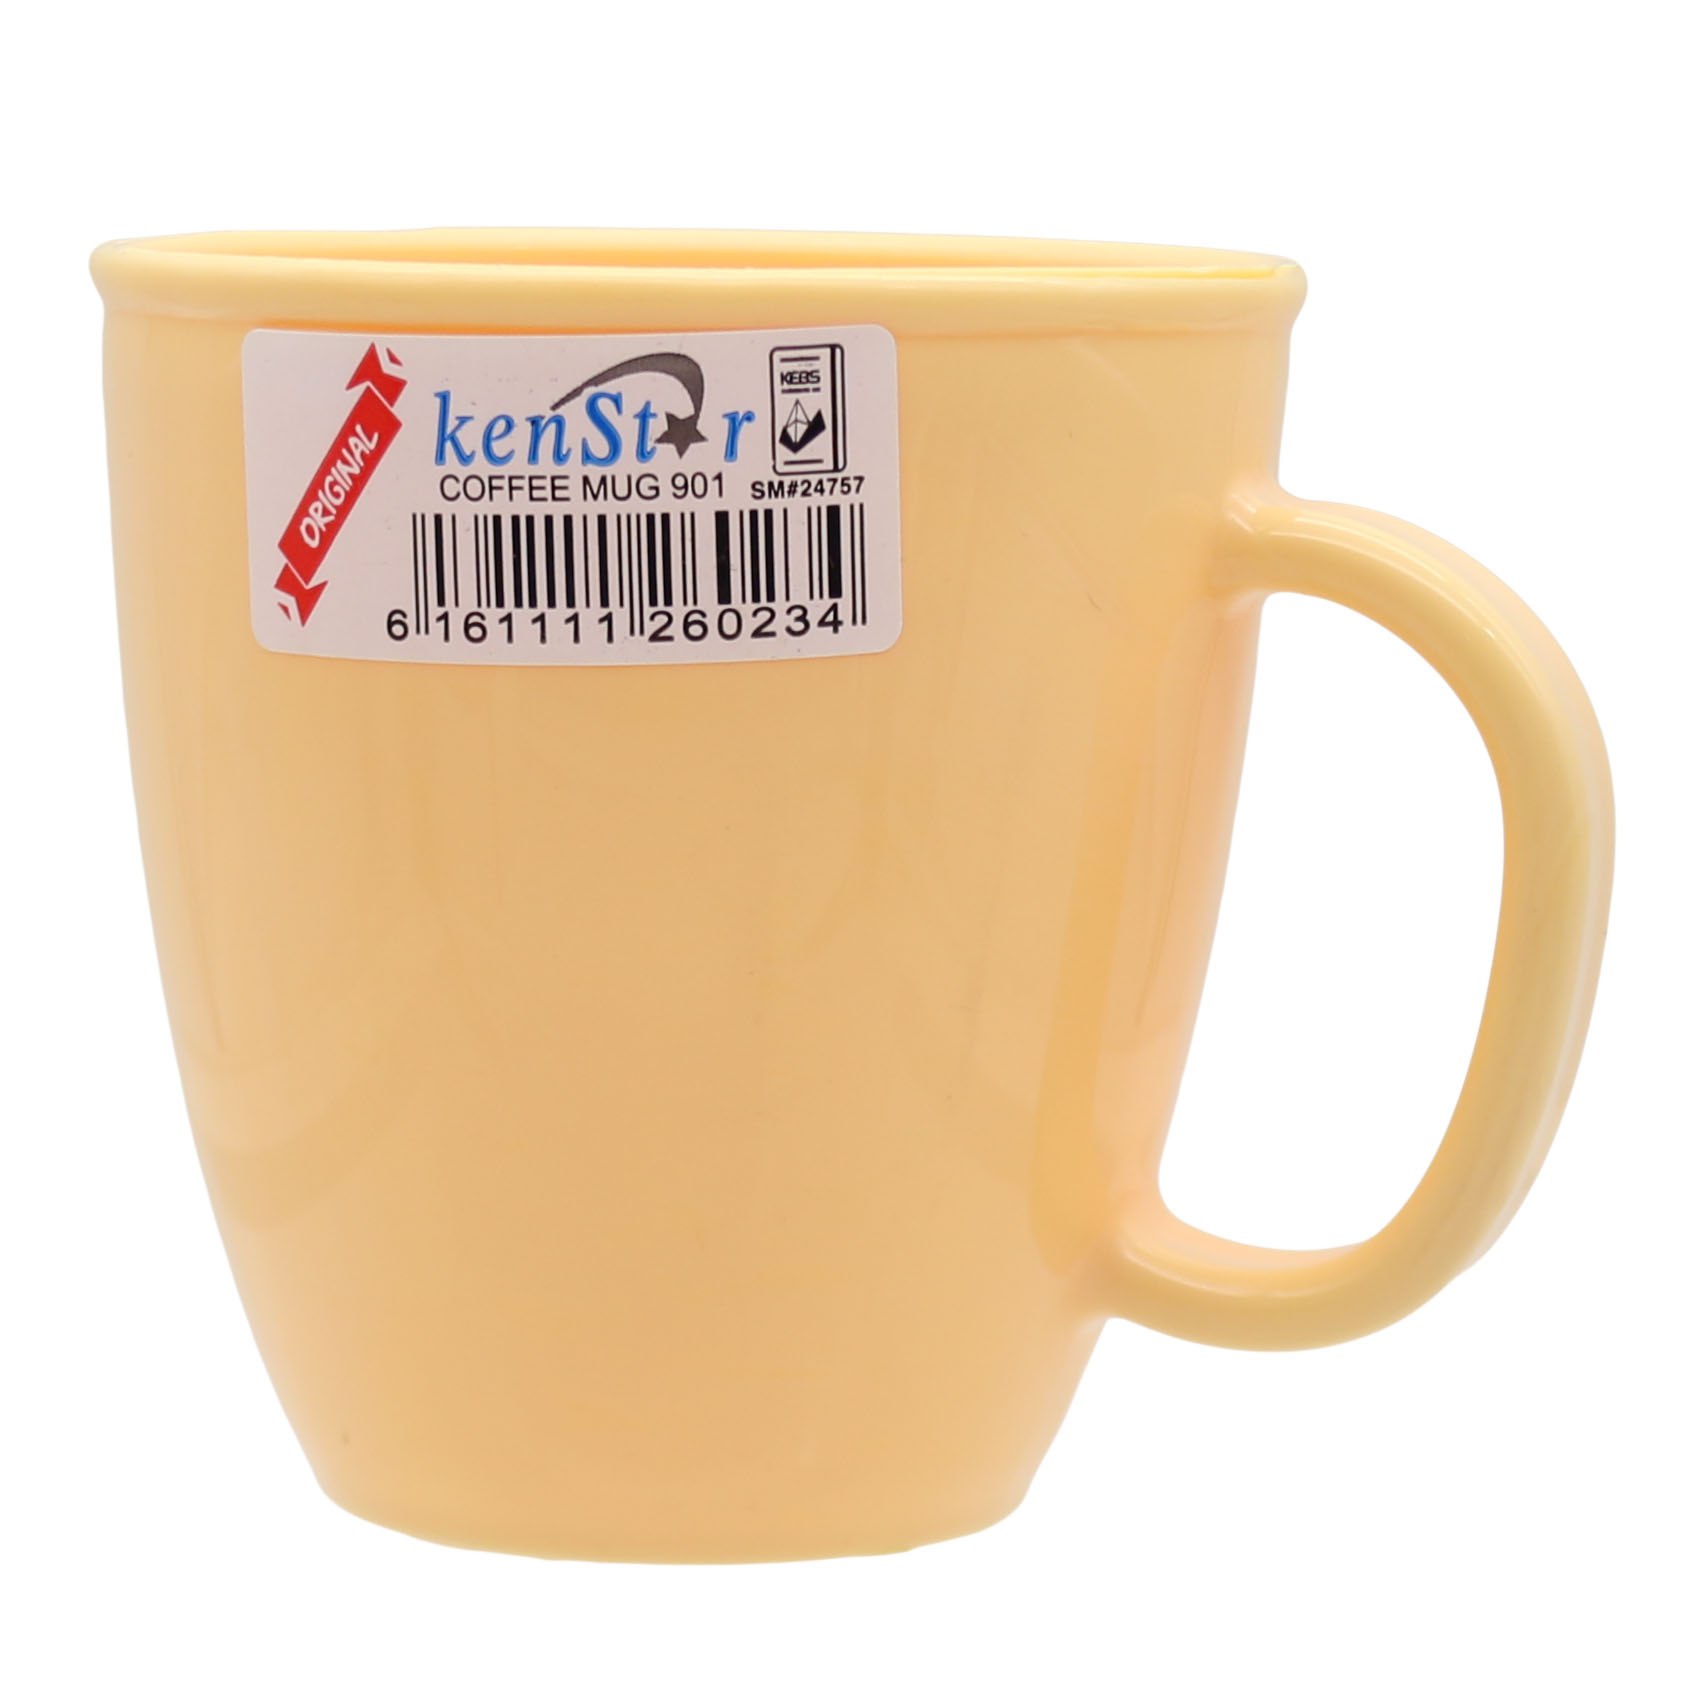 Kenstar Coffee Mug 901